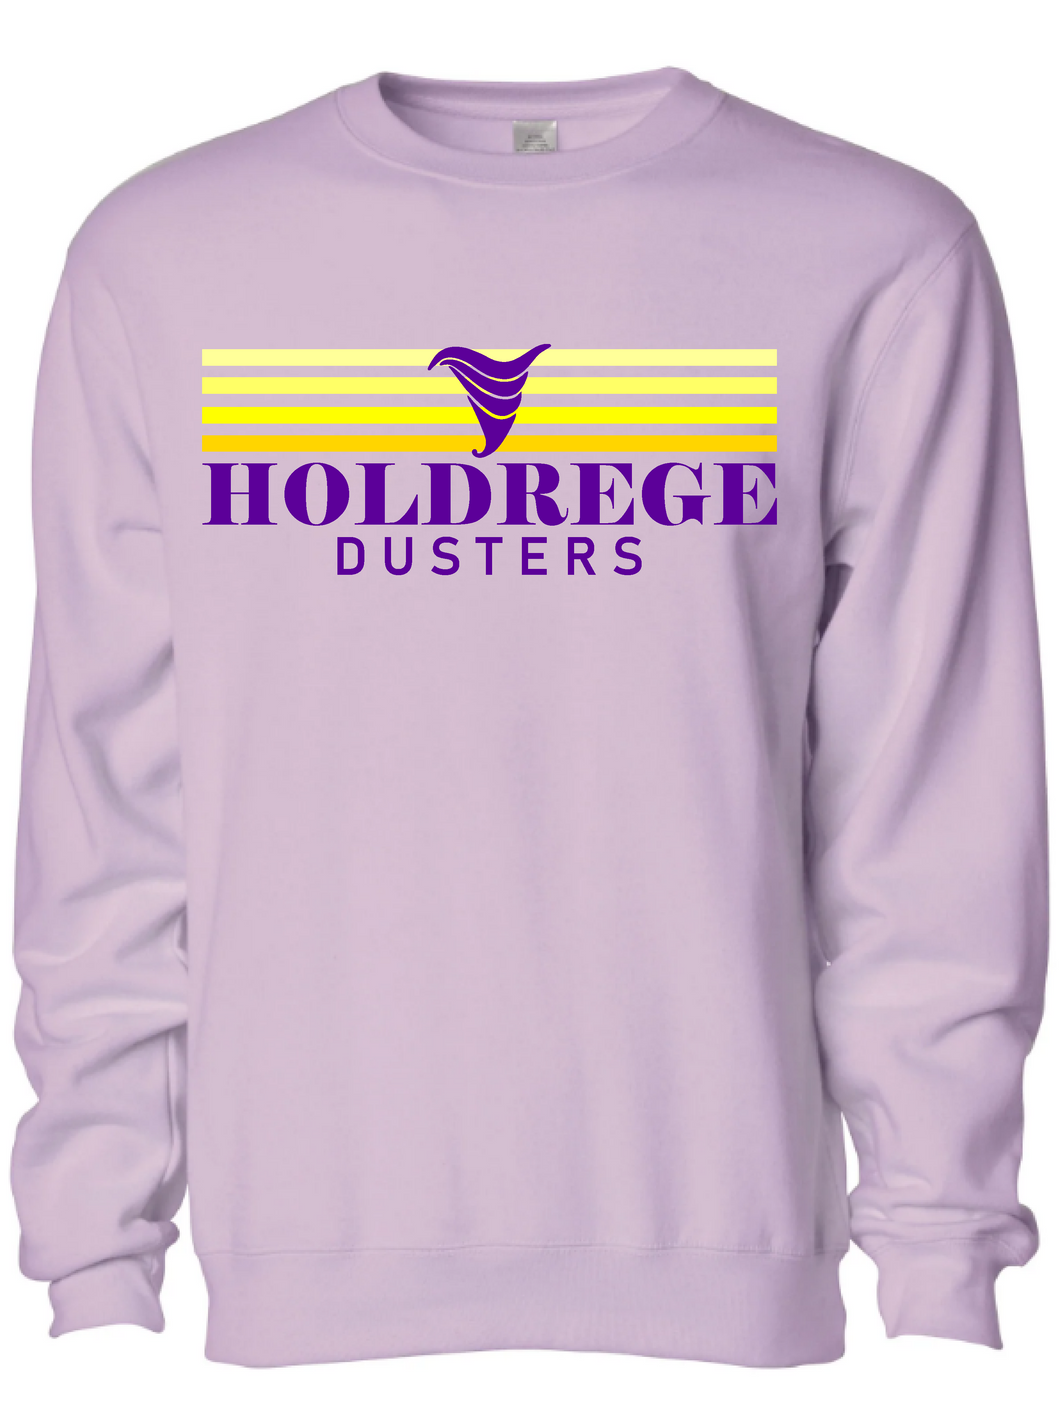 Holdrege Dusters (Crewneck Sweatshirt)